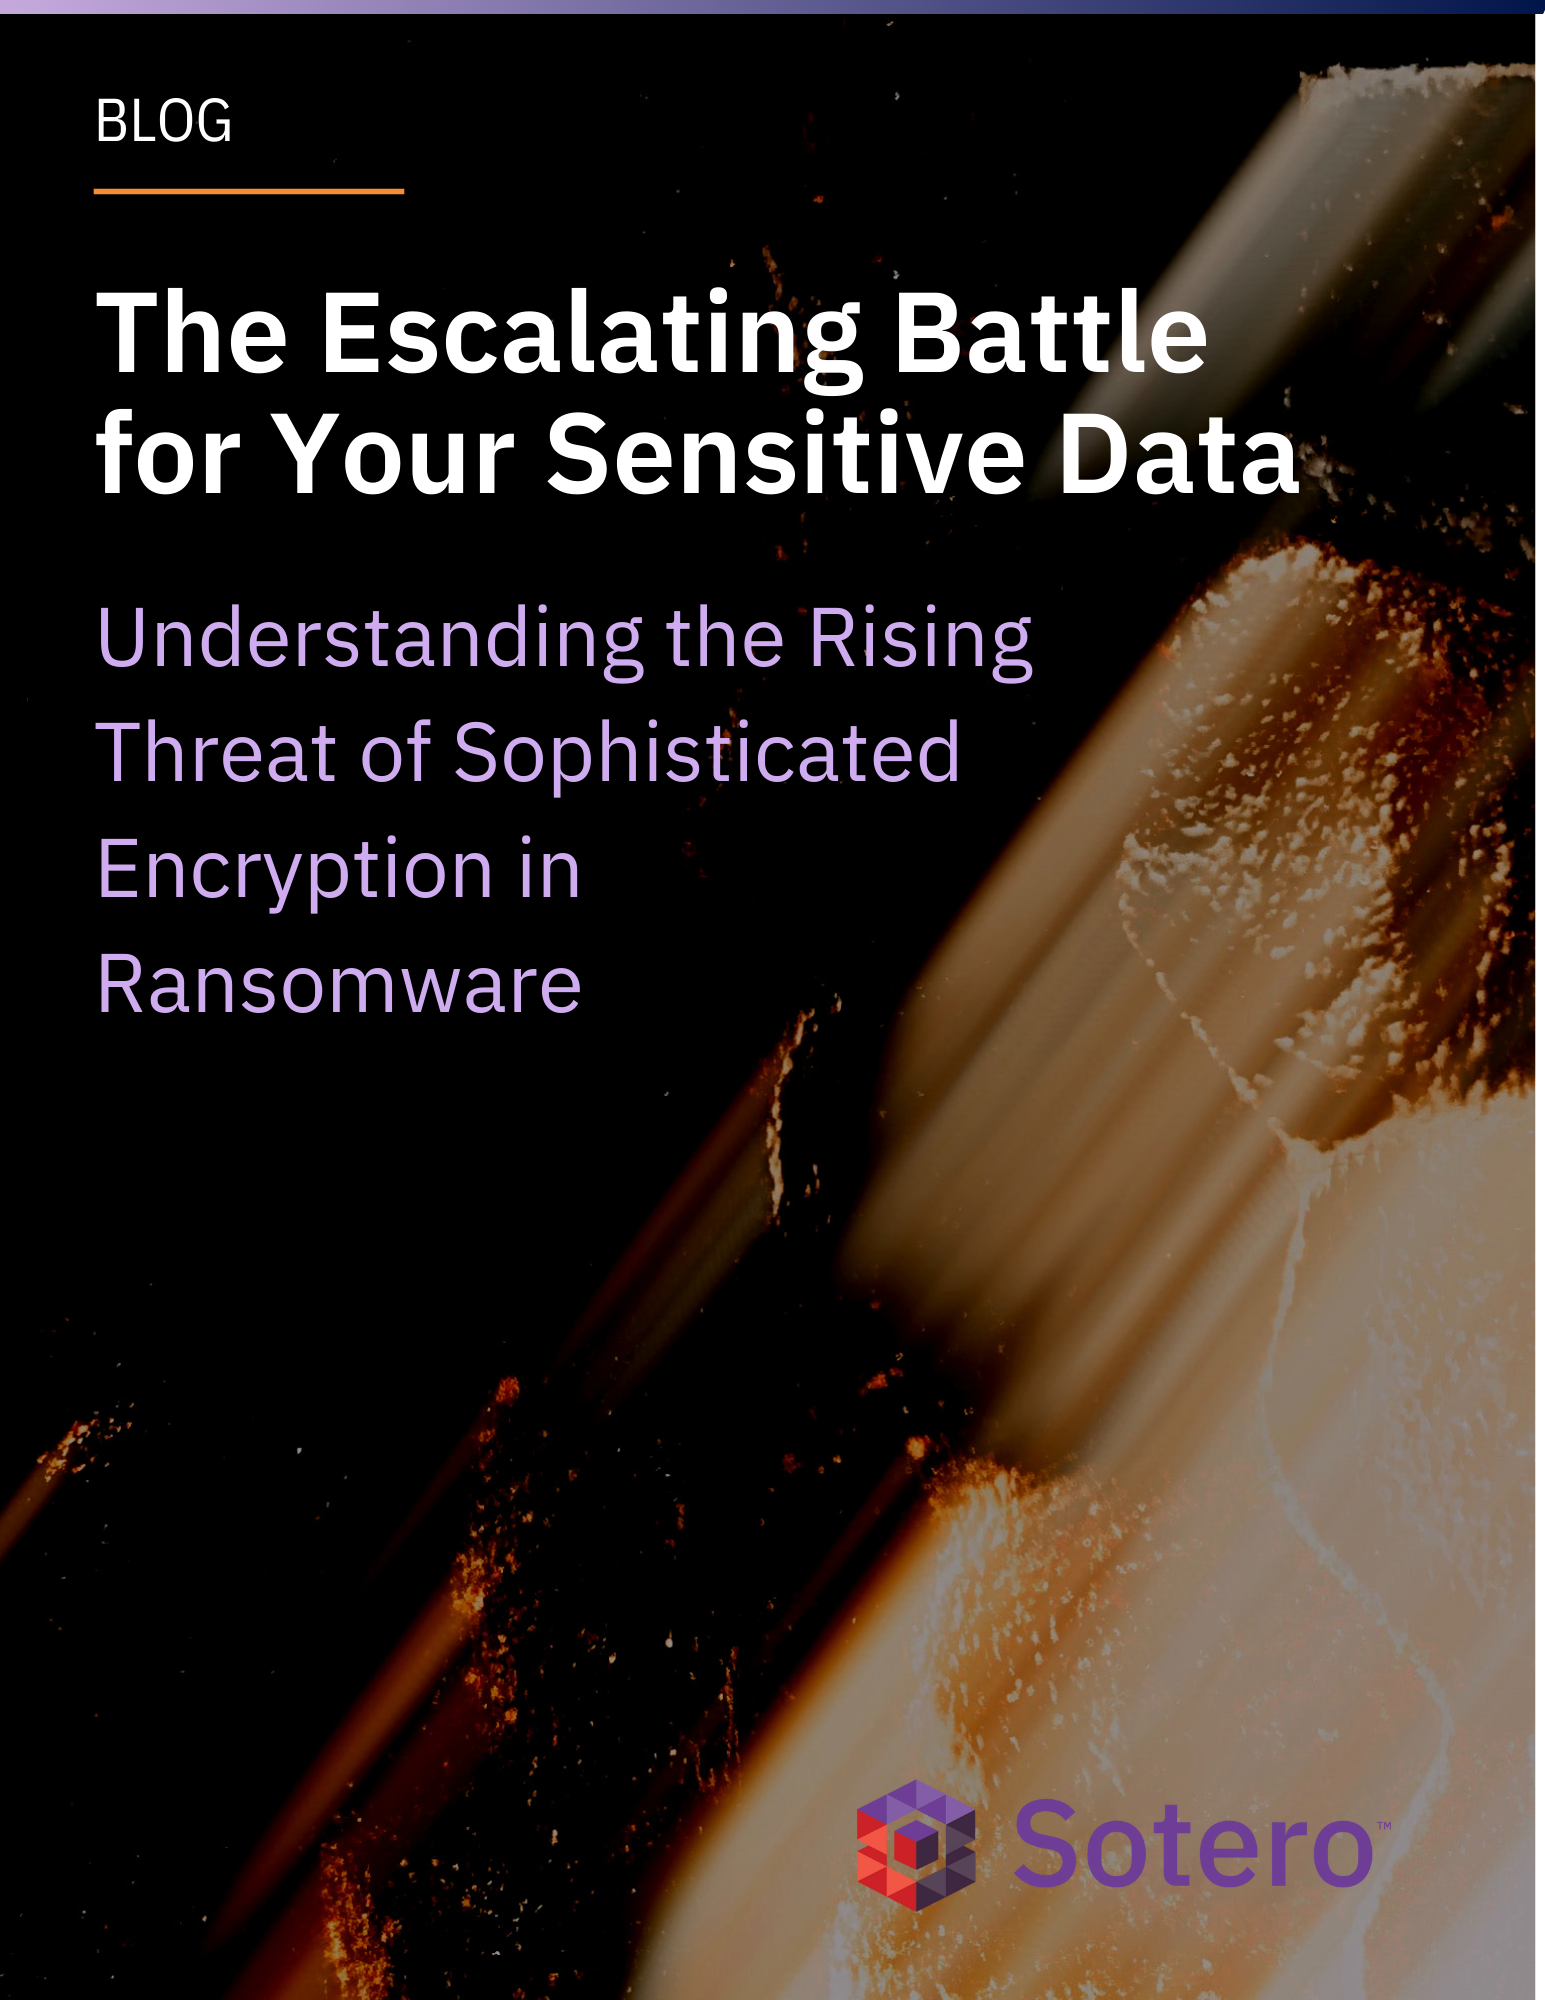 Sotero_blog_The Escalating Battle for Your Sensitive Data_thumbnail